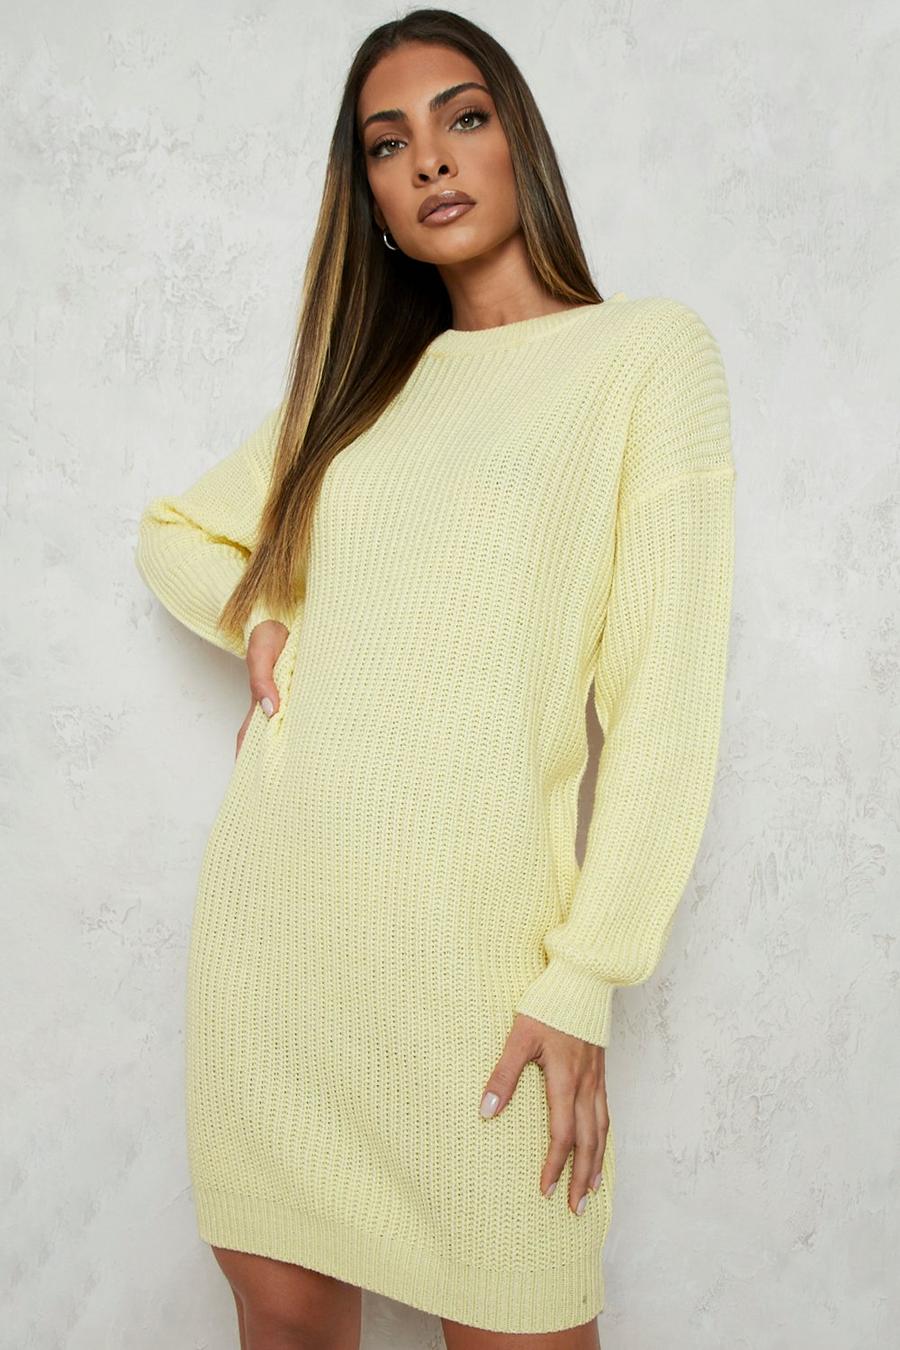 Lemon yellow Crew Neck Sweater Dress